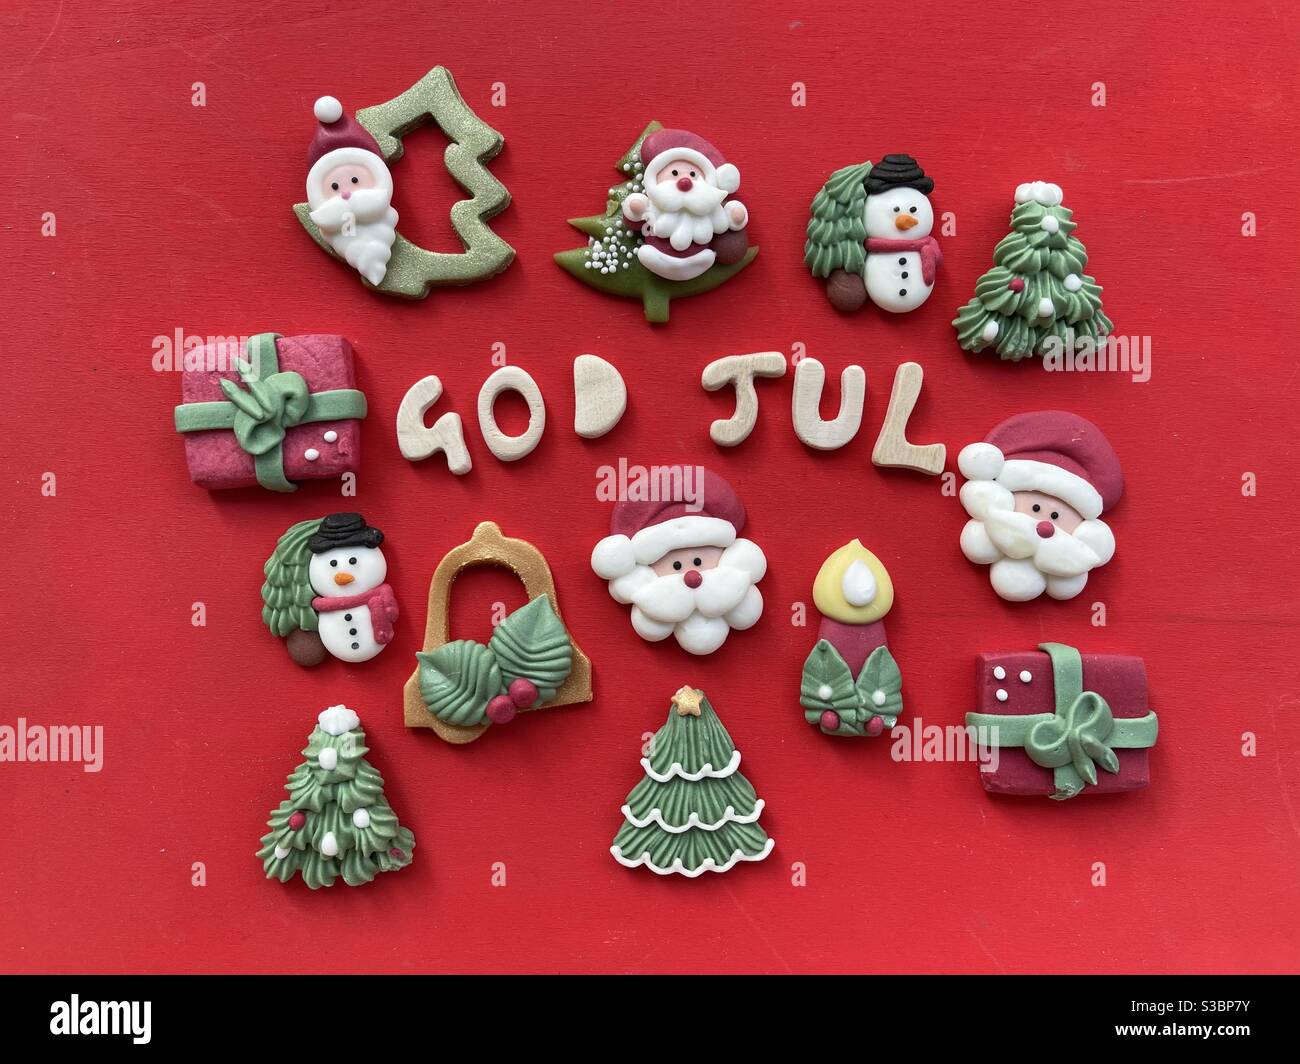 God Jul Ornament Merry Christmas In Swedish & Norwegian Hand Cut From Oak 